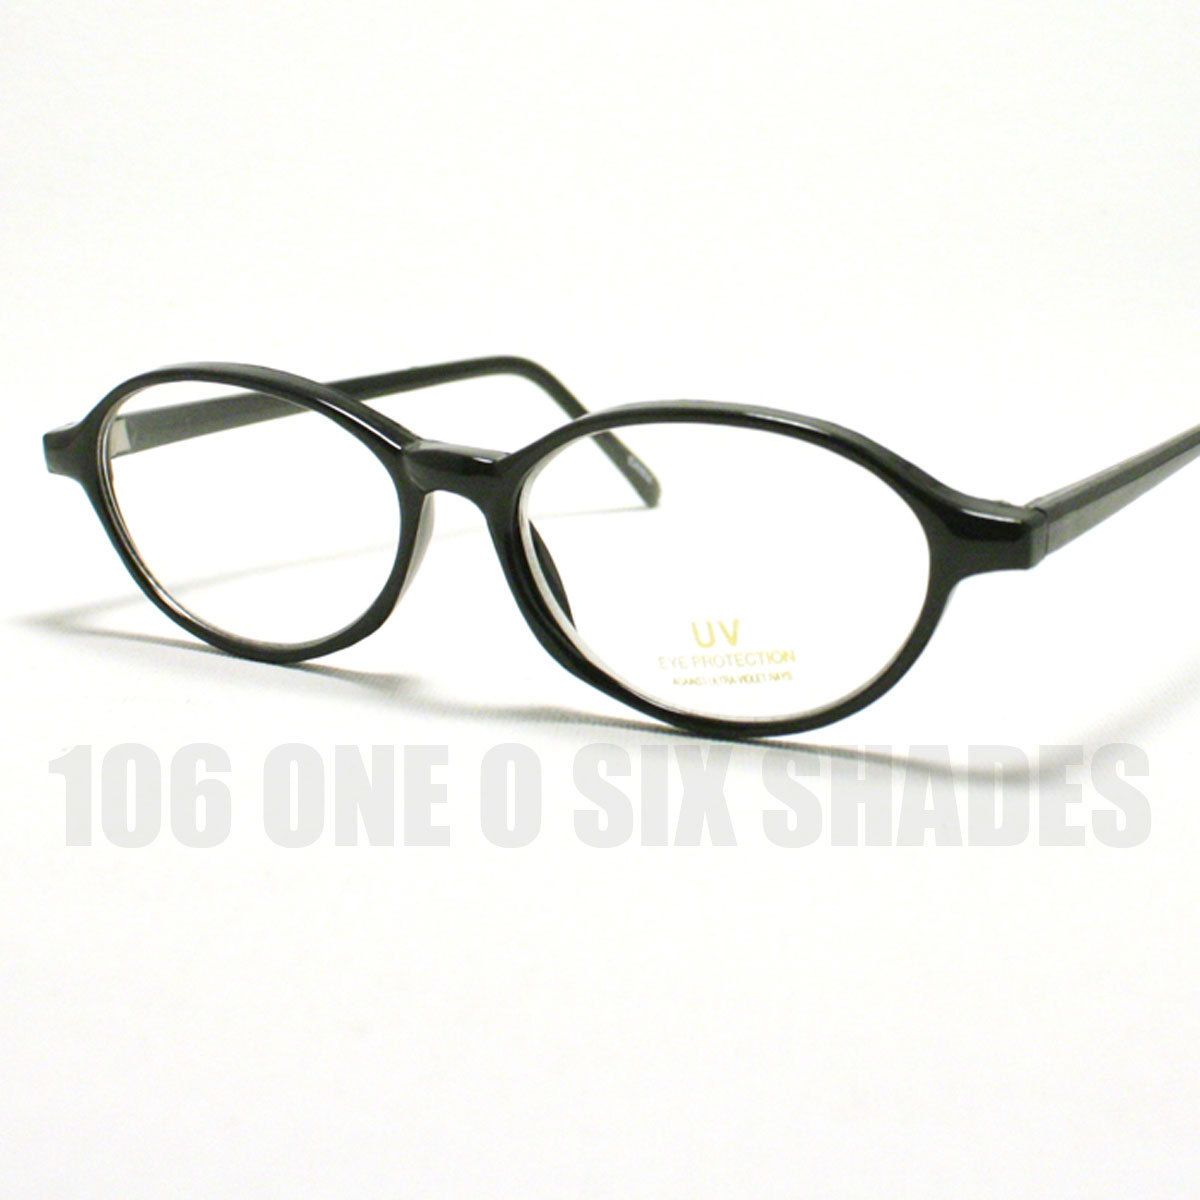  Small Size Oval Shaped Eyeglass Frame Optical Glasses Black